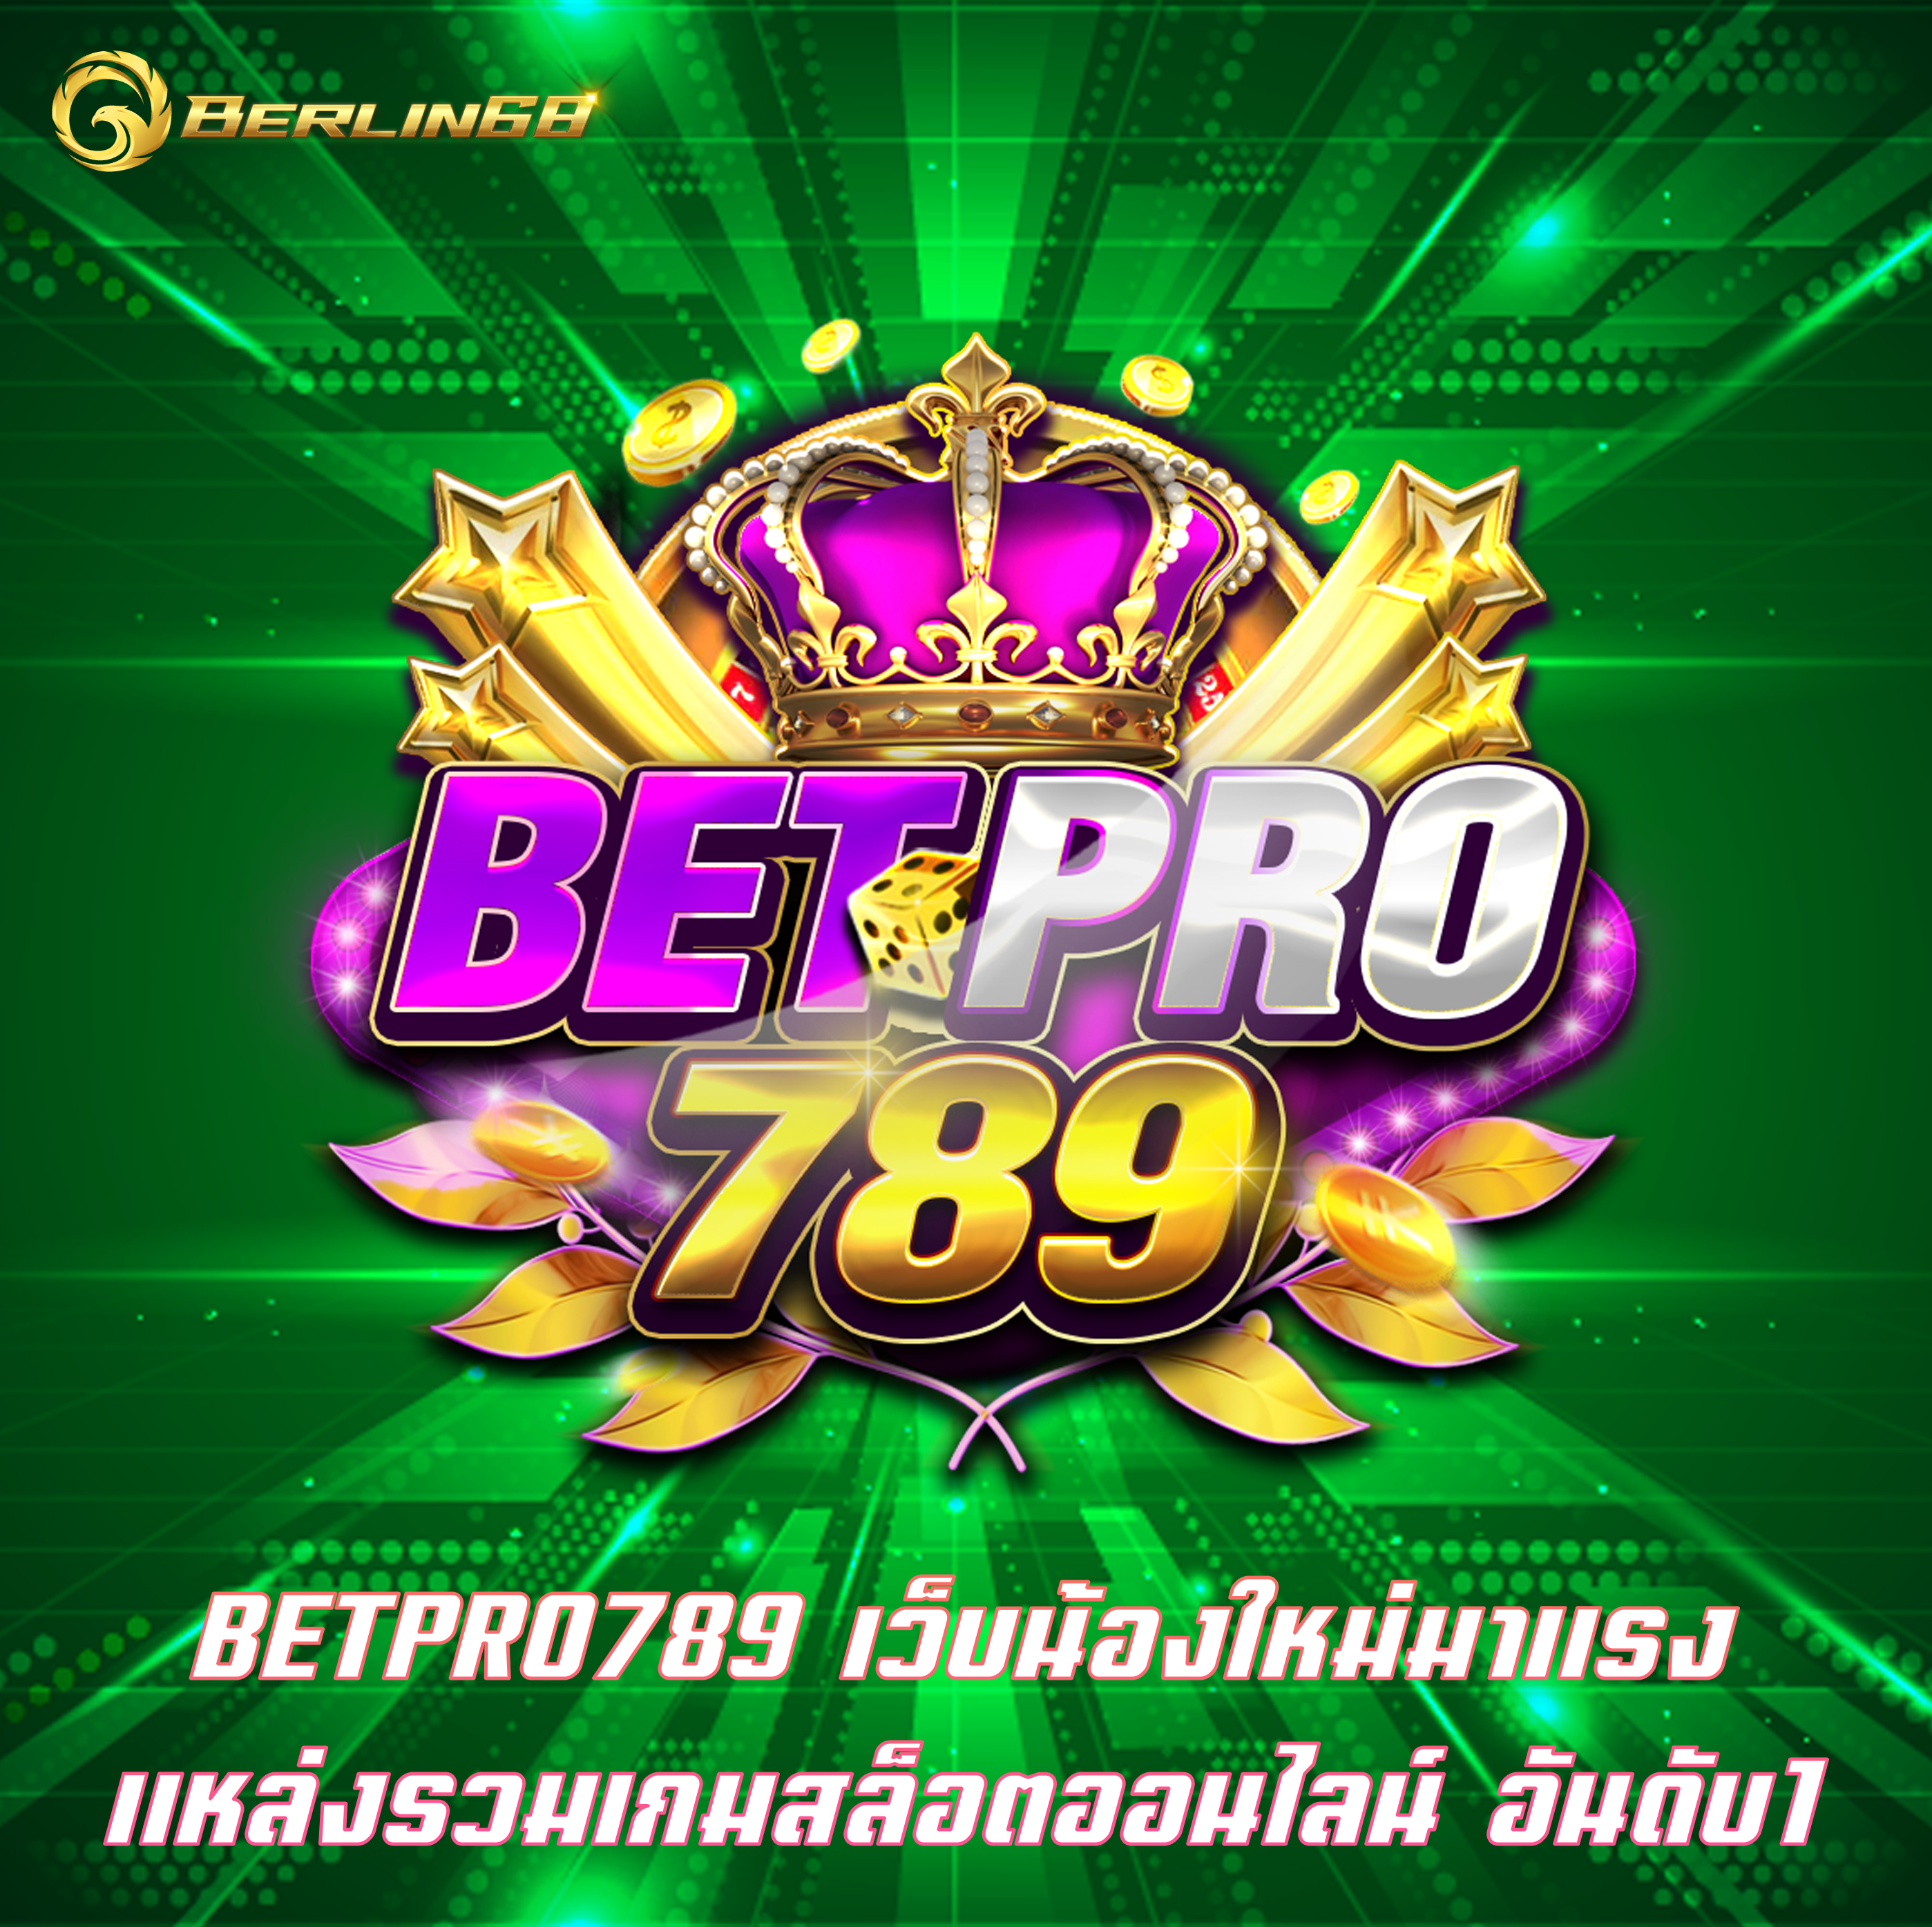 BETPRO789 เว็บน้องใหม่มาแรง แหล่งรวมเกมสล็อตออนไลน์ อันดับ1